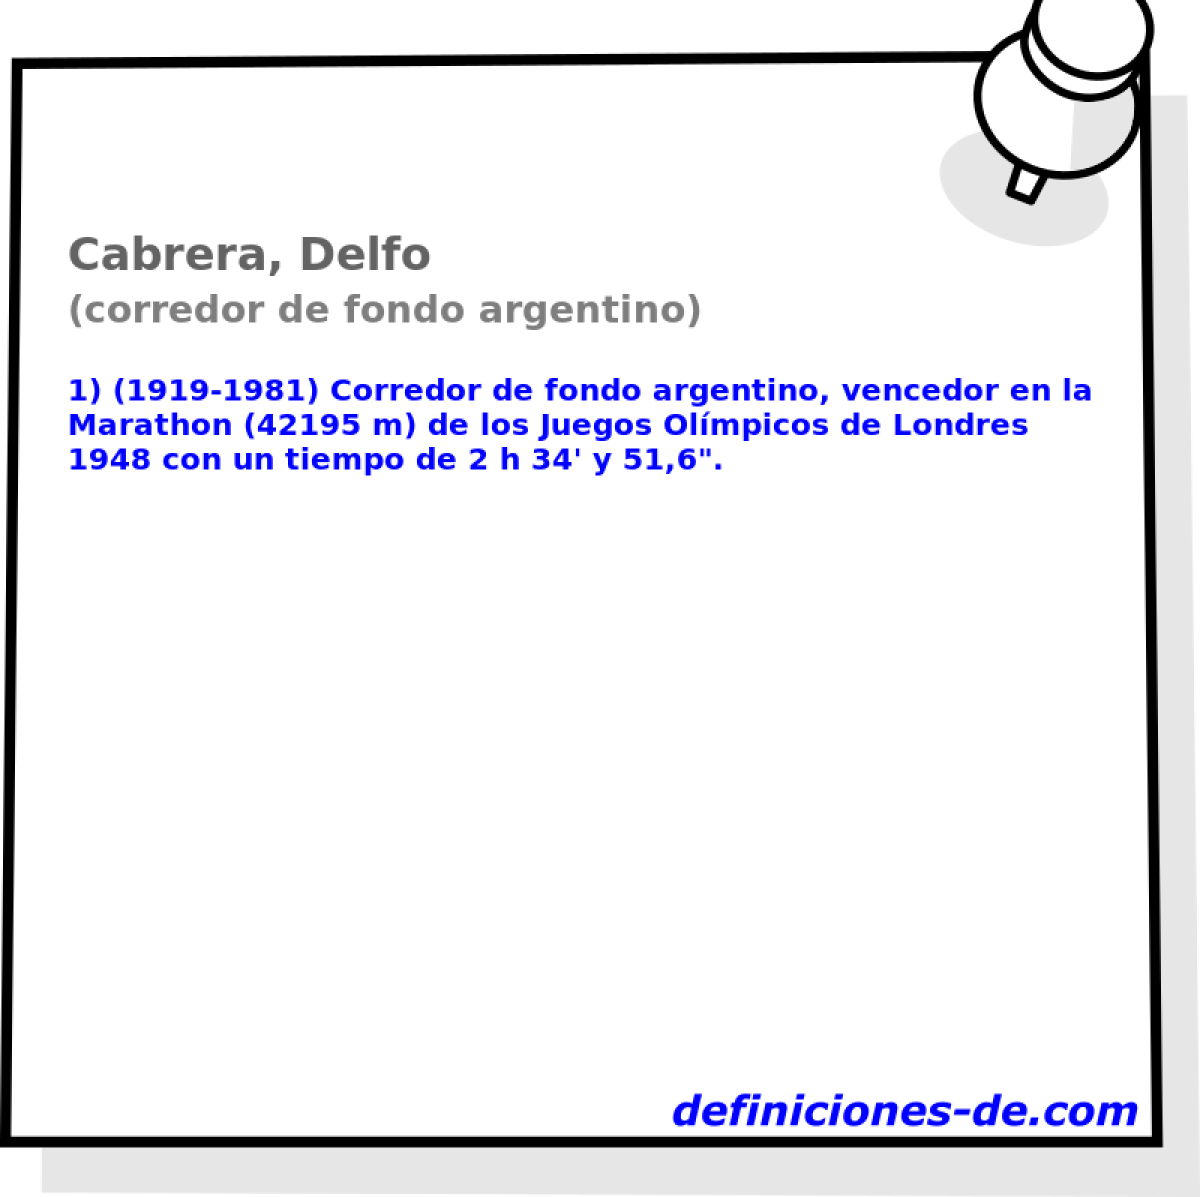 Cabrera, Delfo (corredor de fondo argentino)